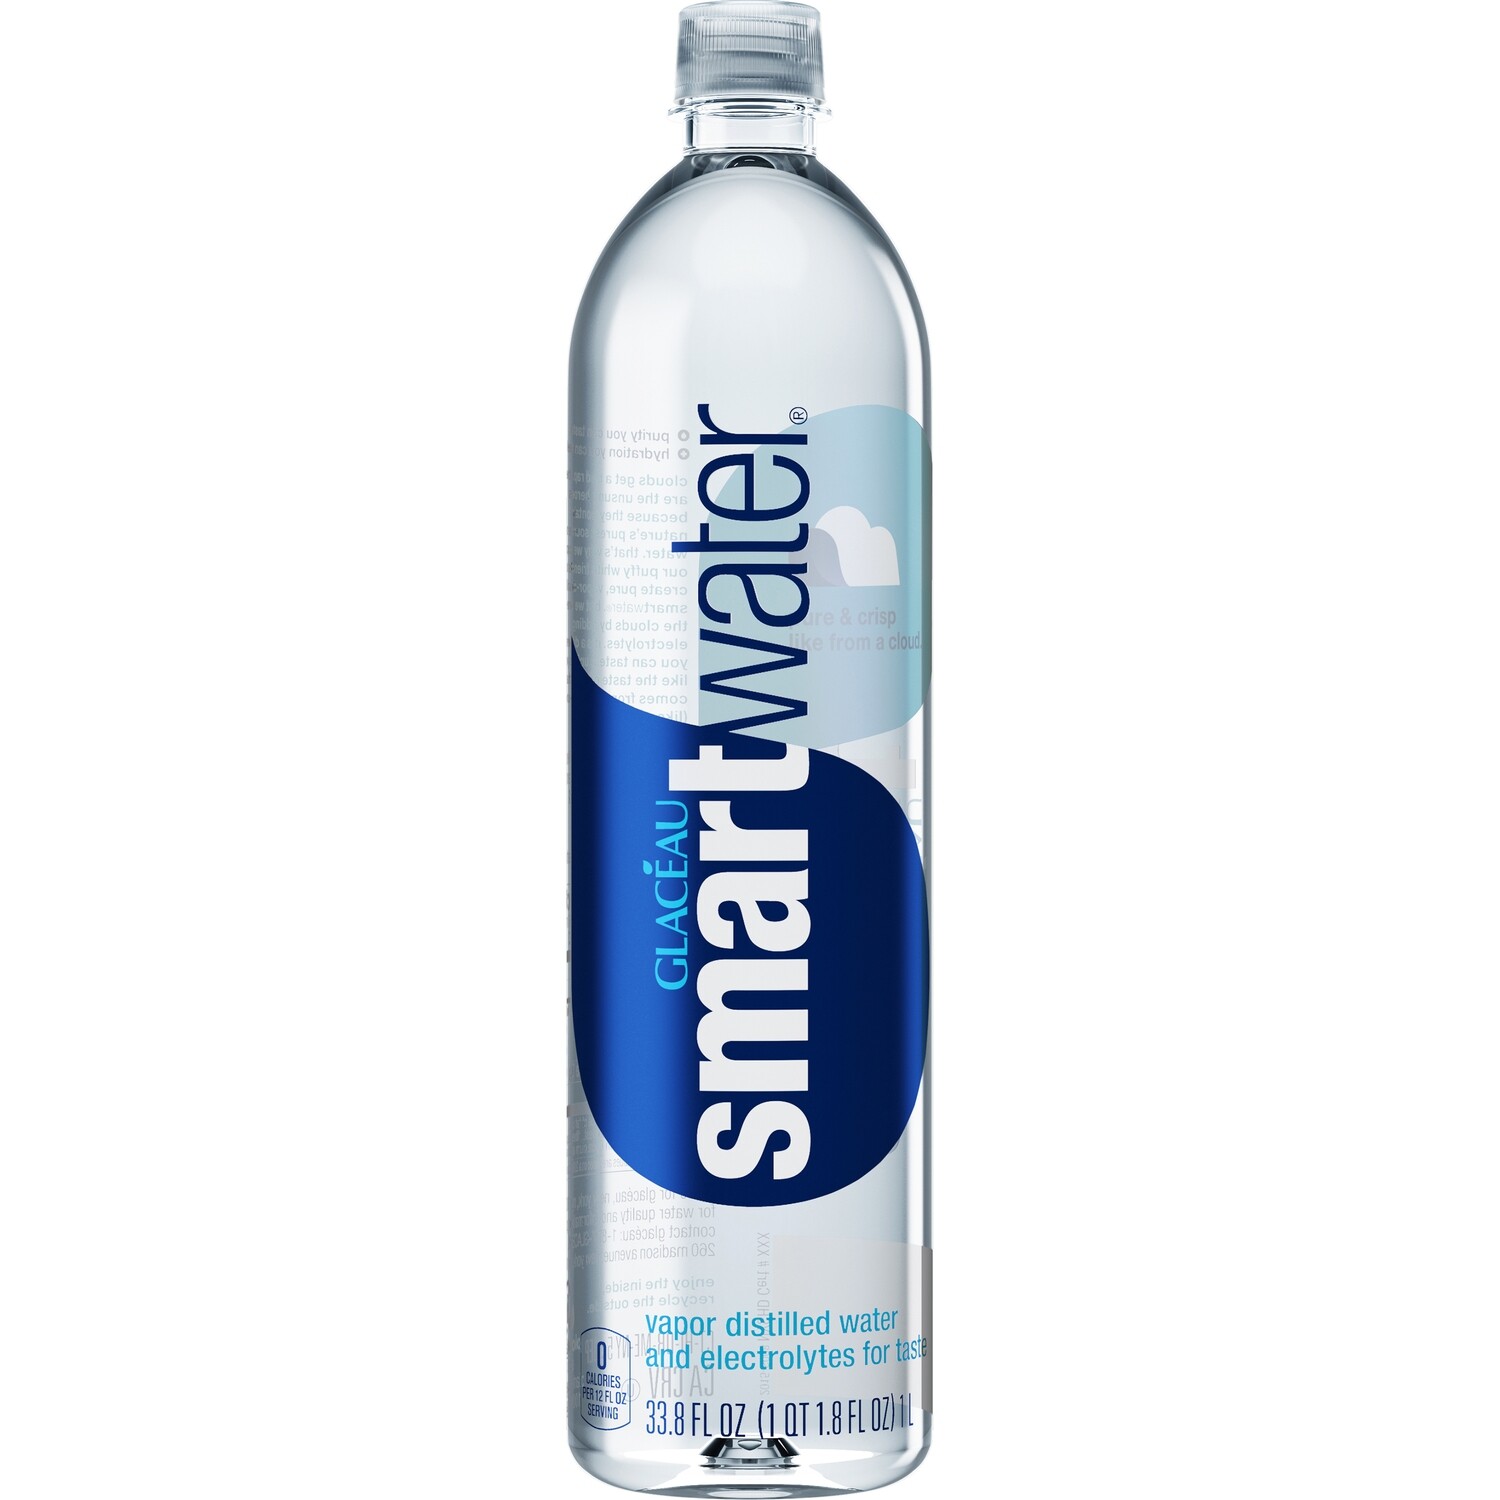 Smartwater 1L